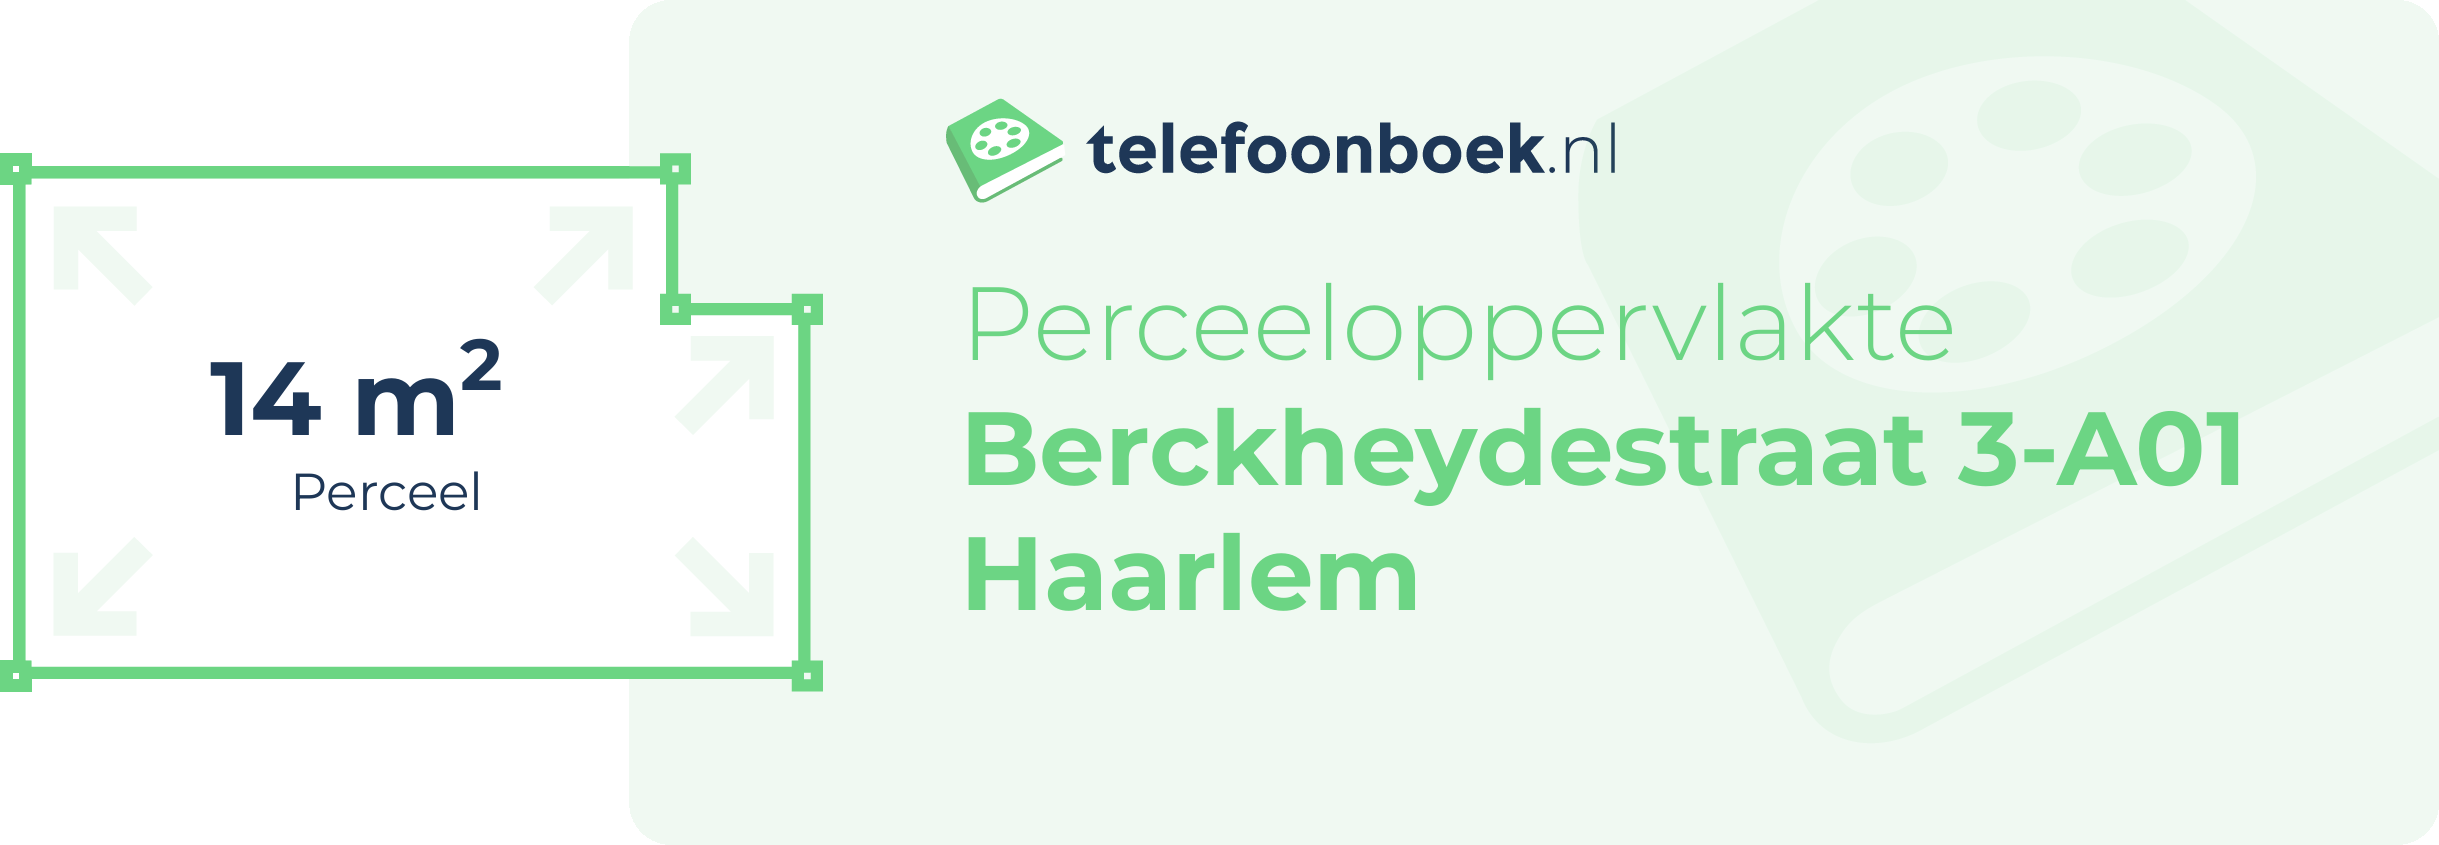 Perceeloppervlakte Berckheydestraat 3-A01 Haarlem